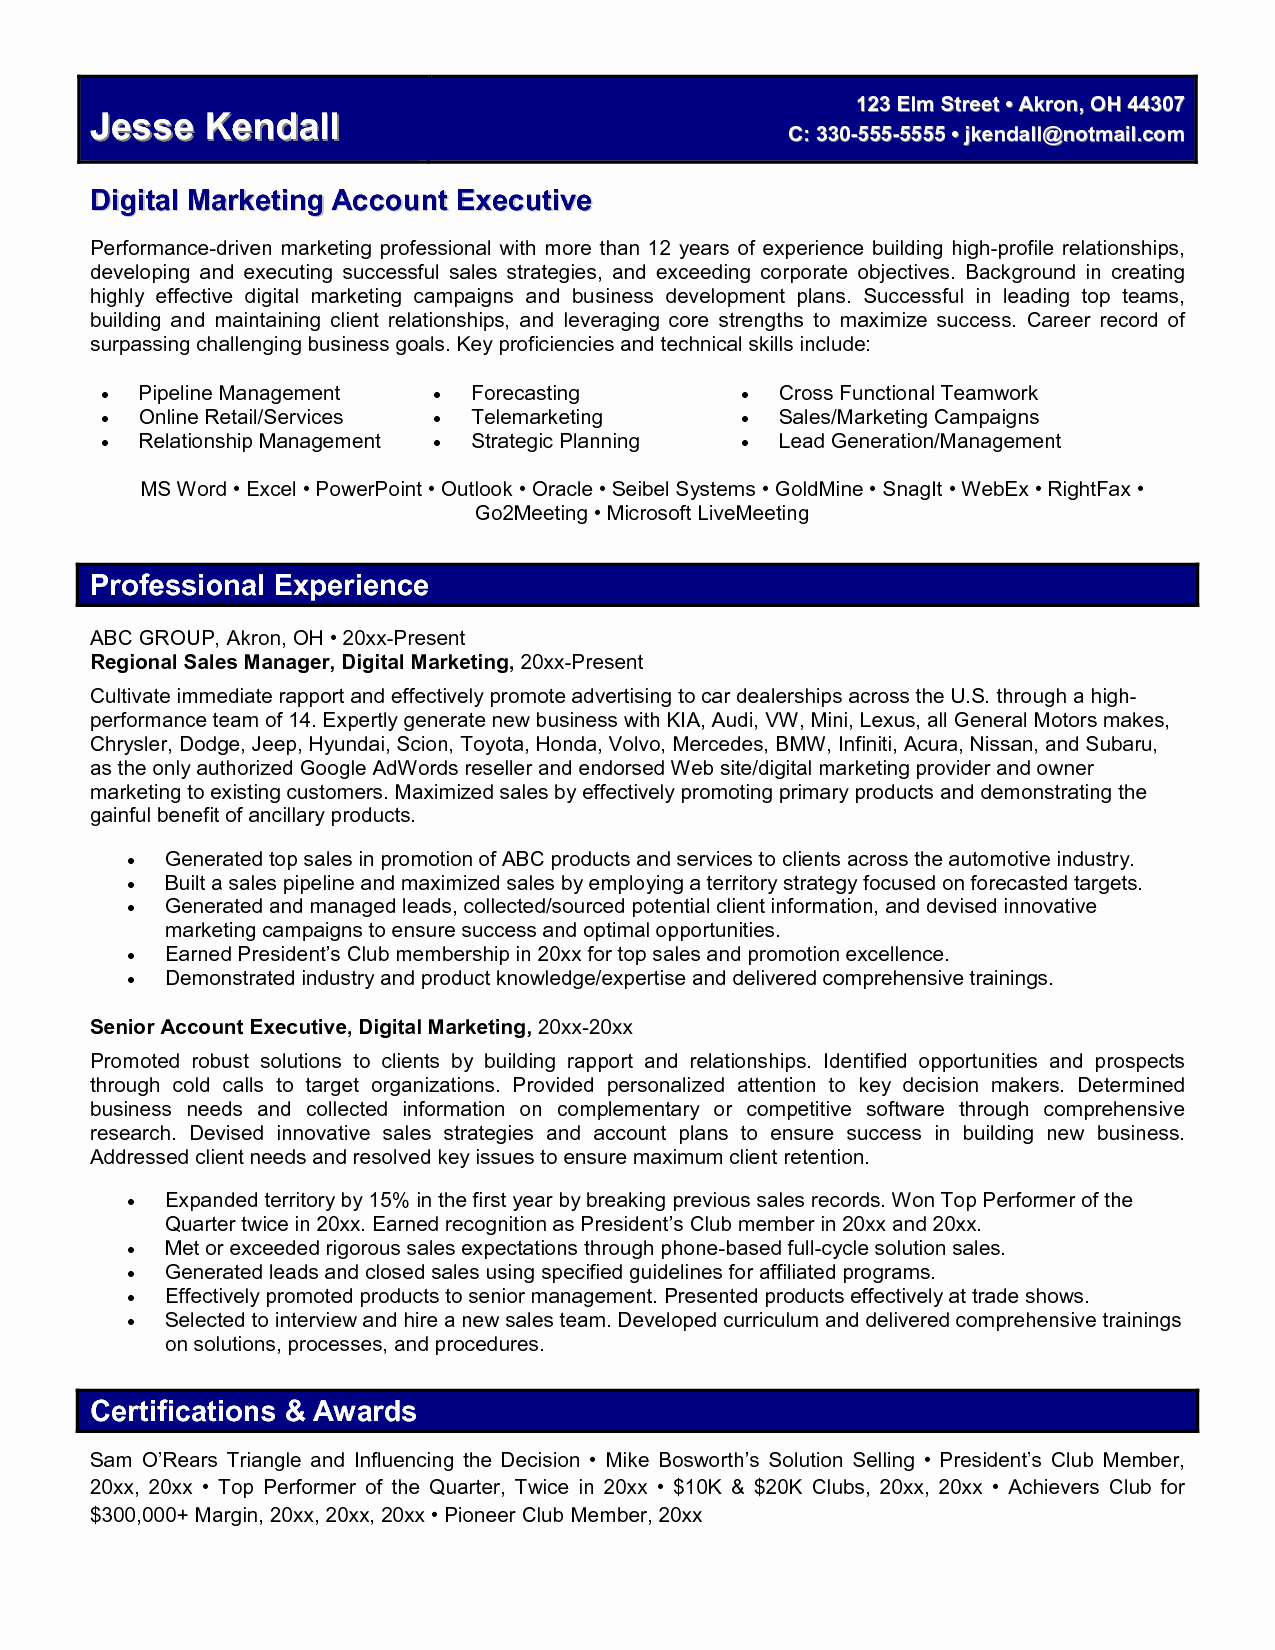 Digital Marketing Resume Sample Lovely Digital Marketing Resume